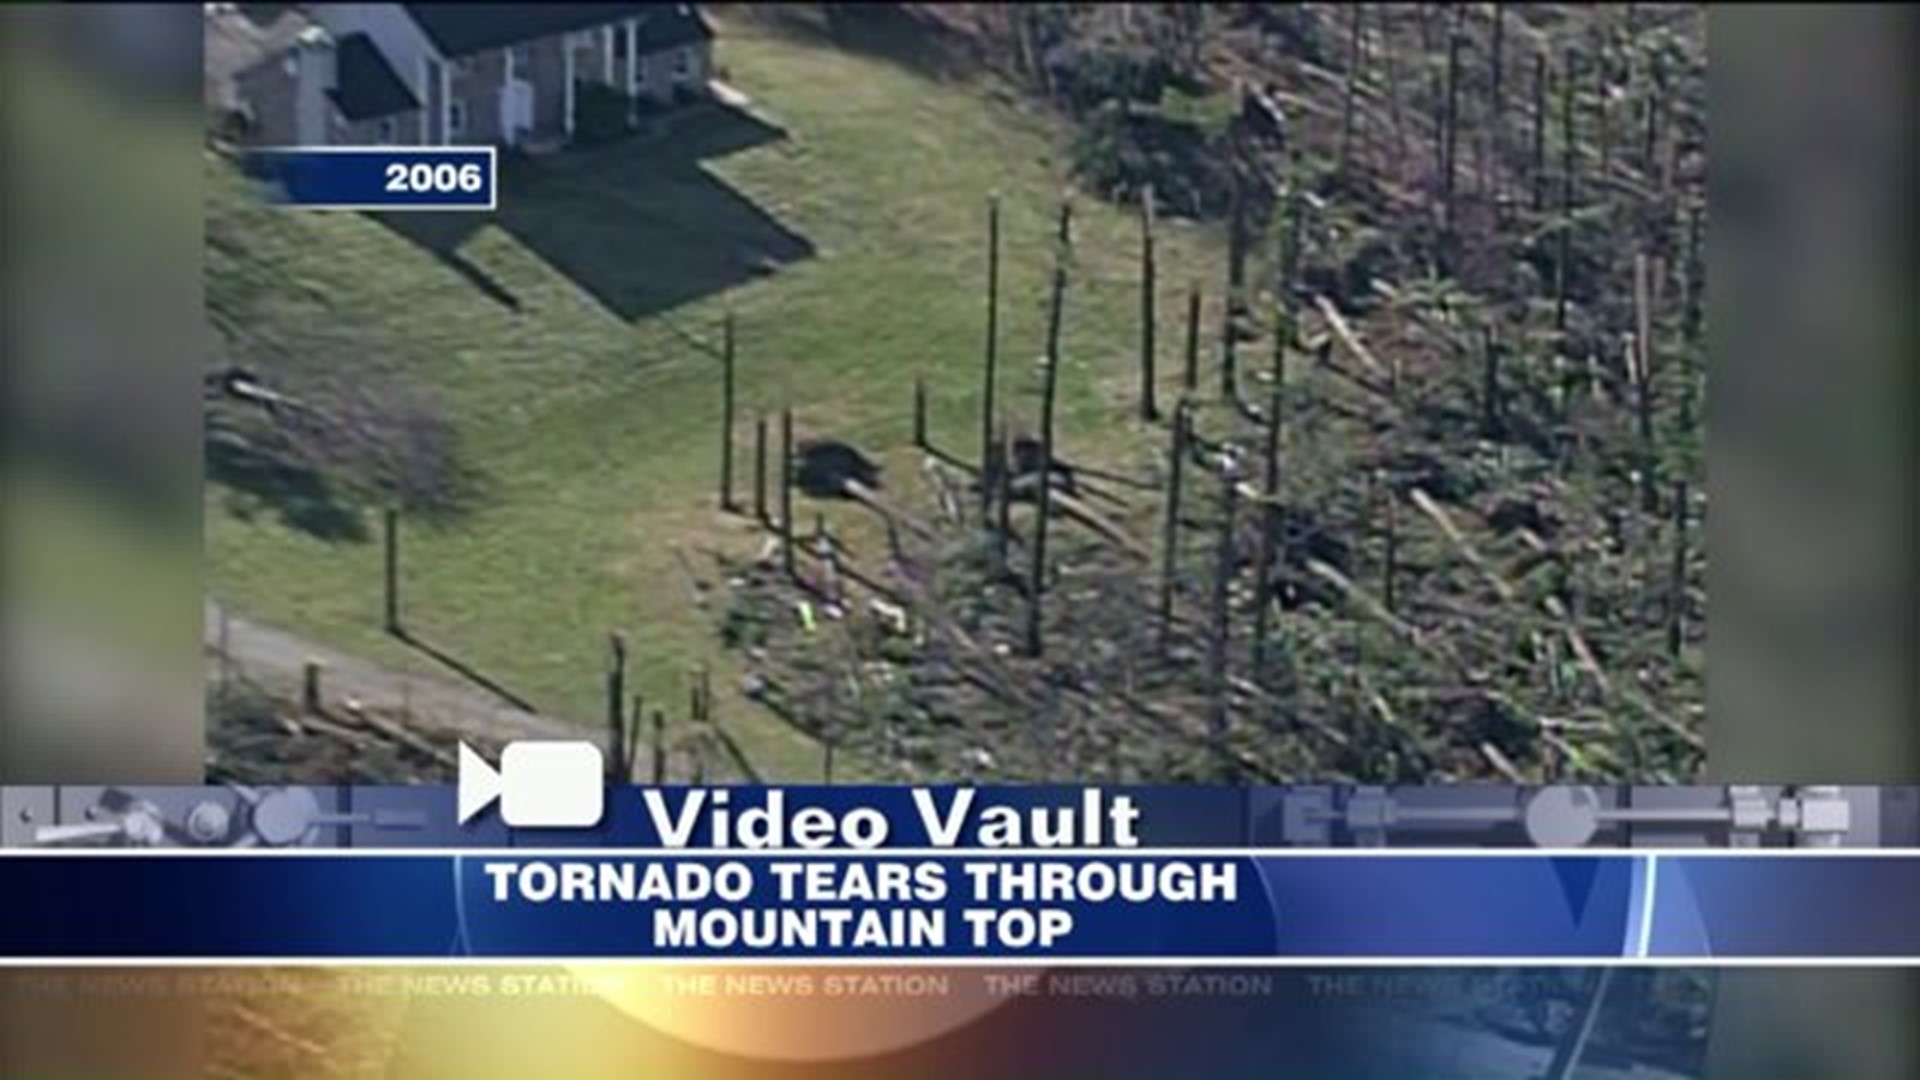 Video Vault: Tornado Tears Through Mountain Top in 2006